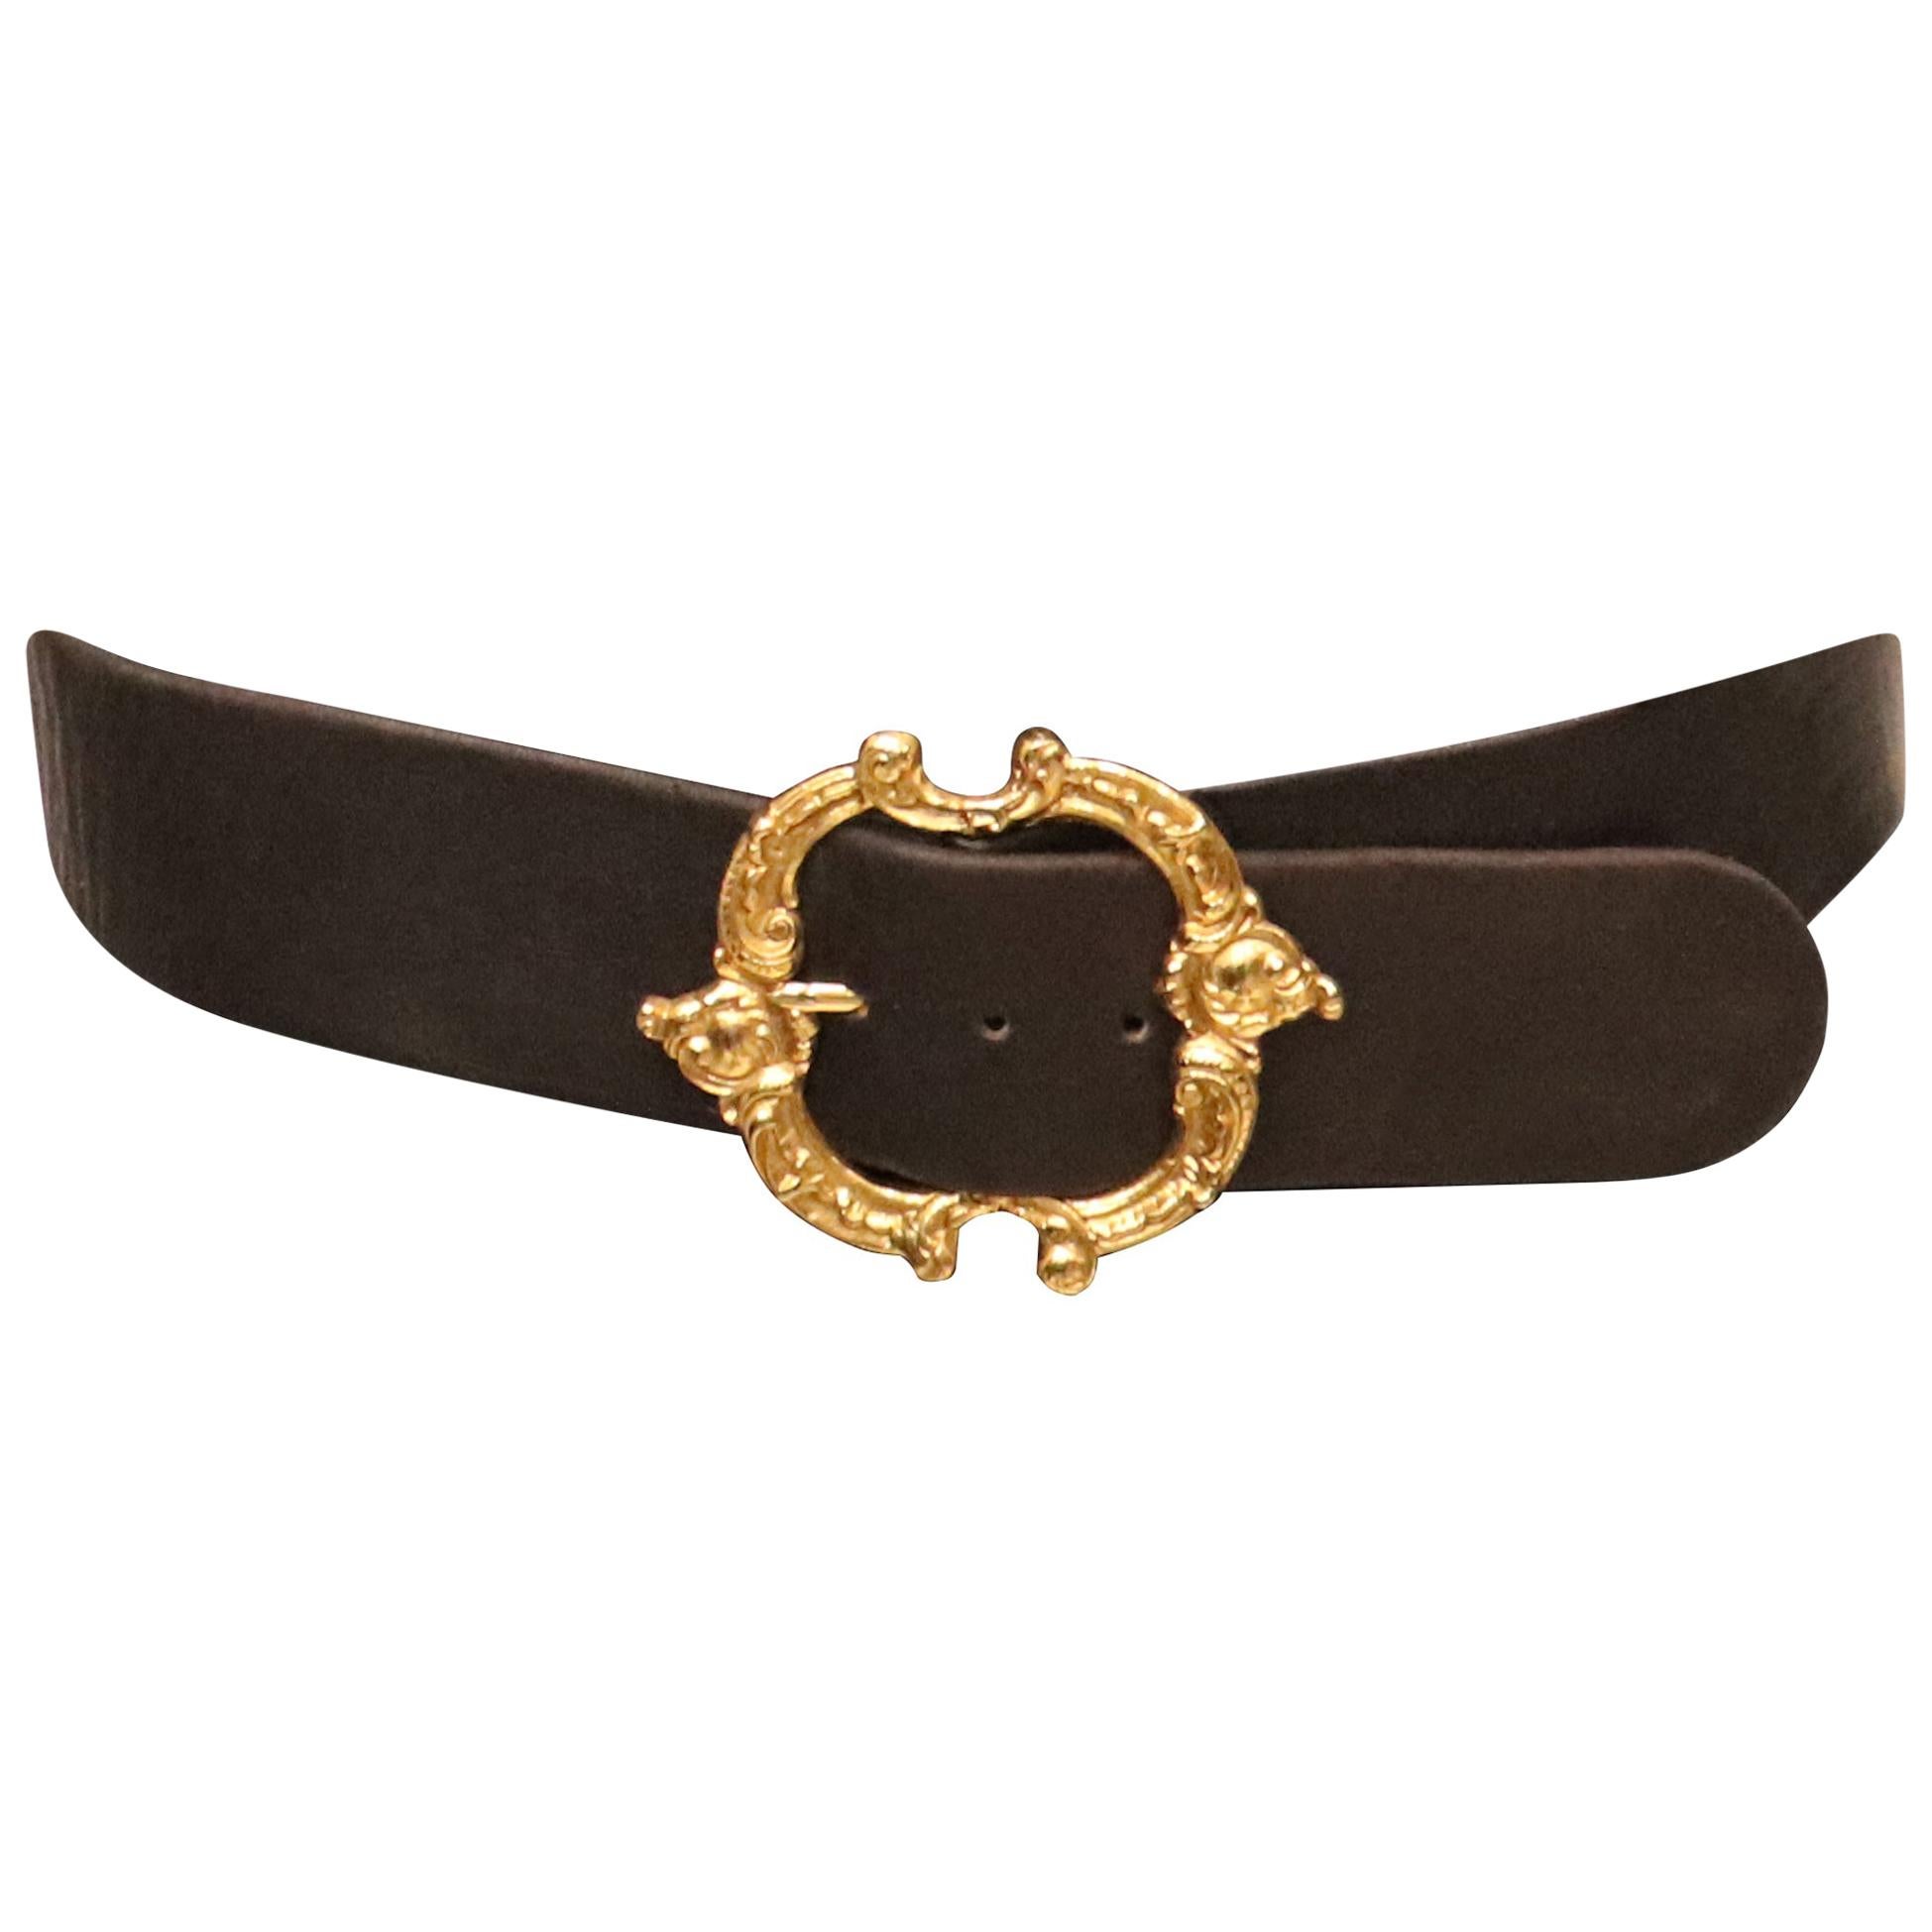 fashion rhinestone vintage brass buckle/Lady Joker pin buckle leather belt/decorative Obi